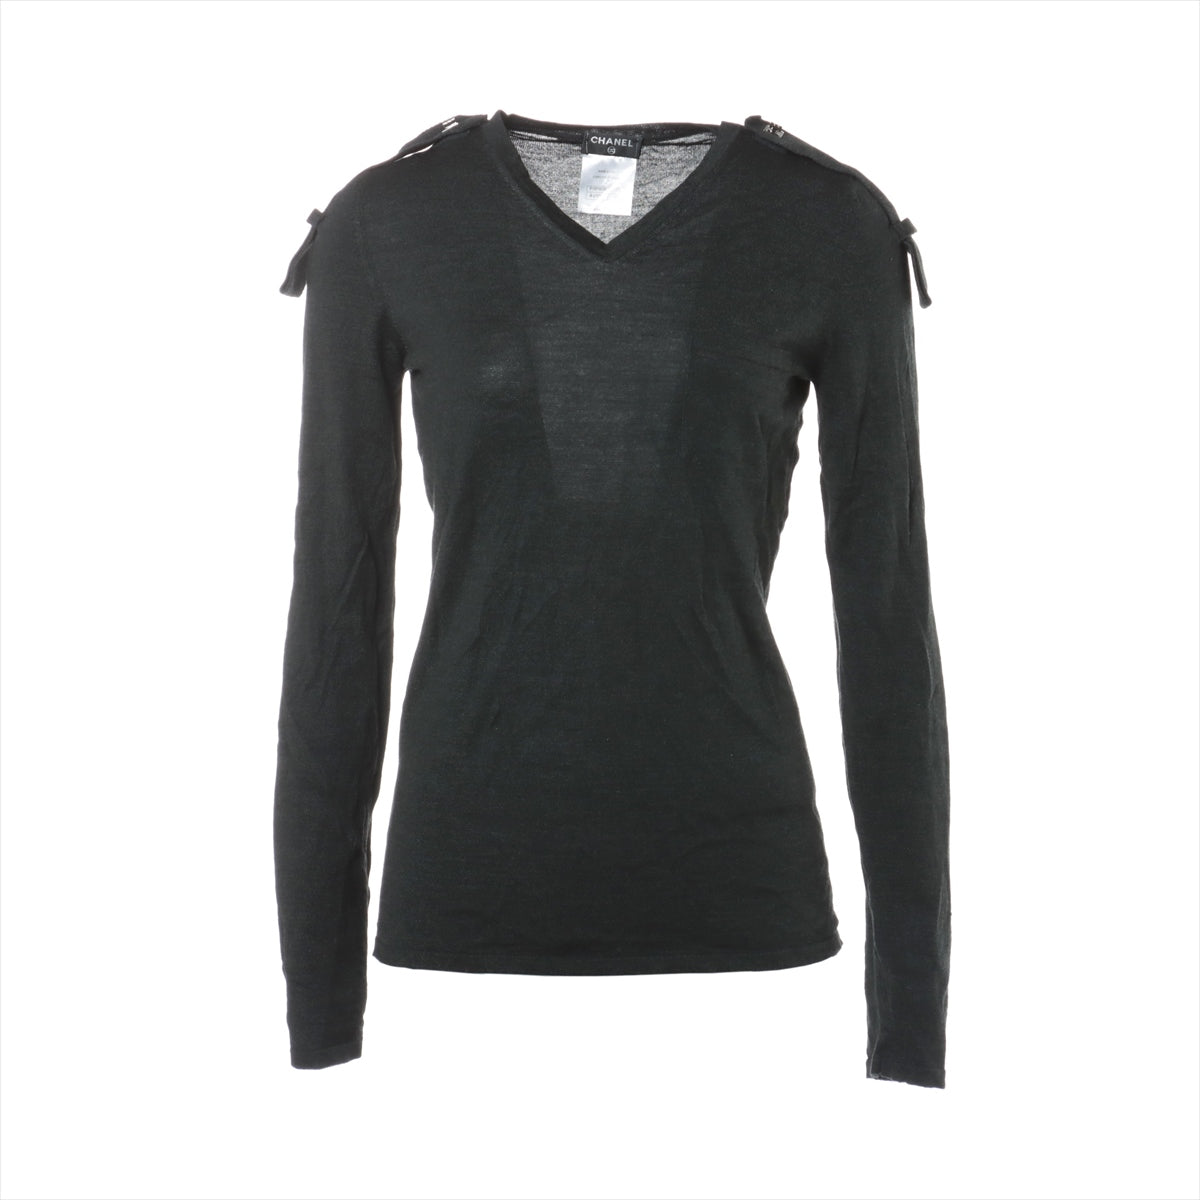 Chanel Wool & silk Sweater 36 Ladies' Grey  P39185K02773 turn lock bracket